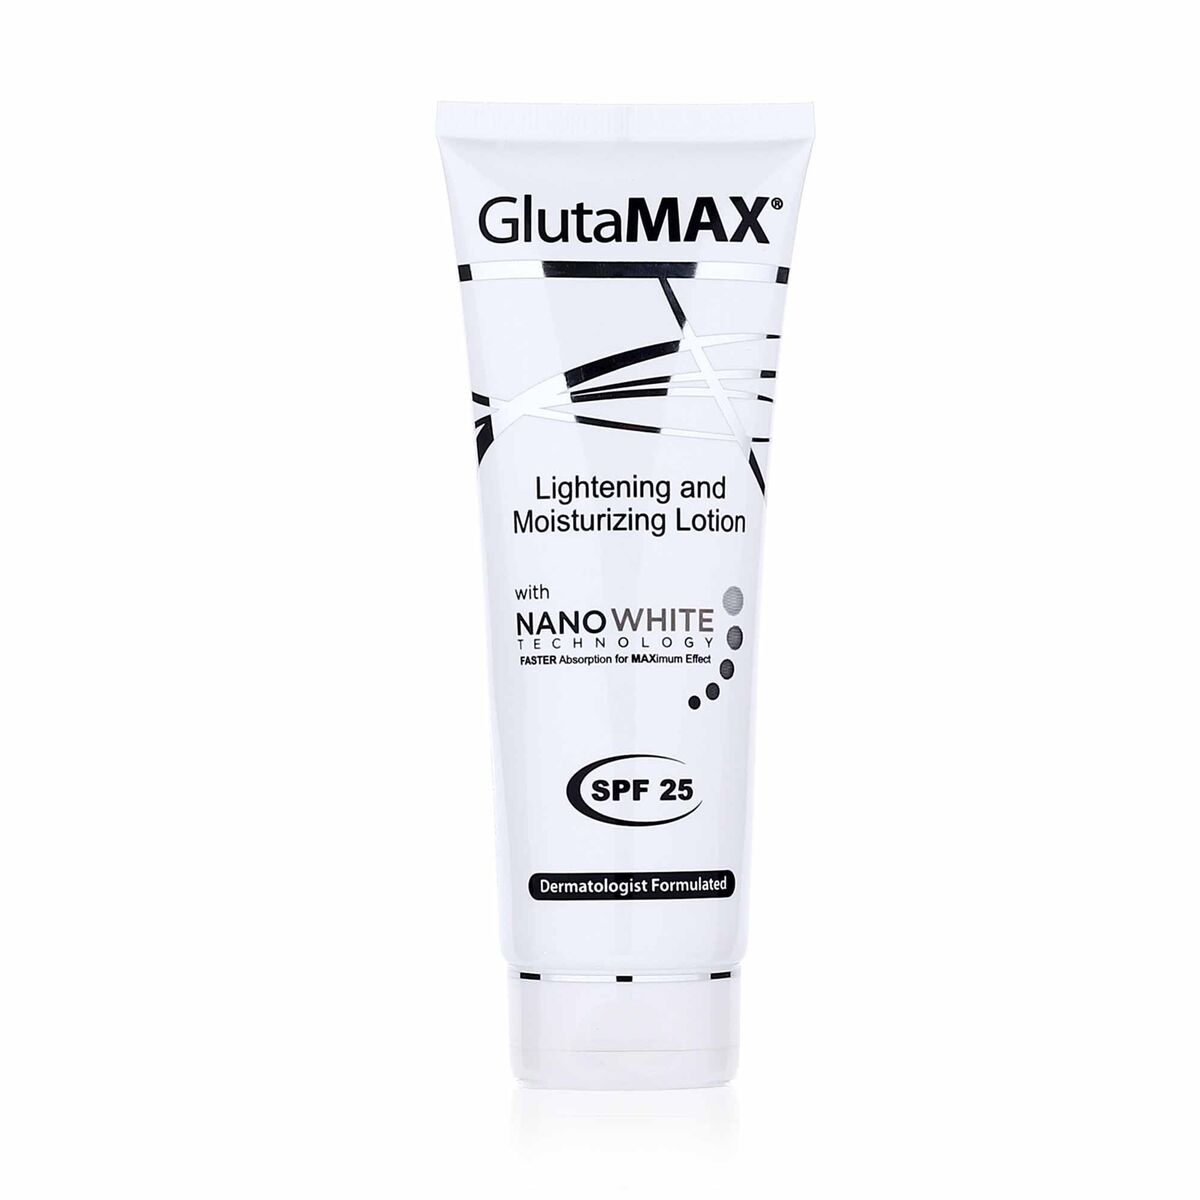 GlutaMAX Moisturizing and Whitening Lotion